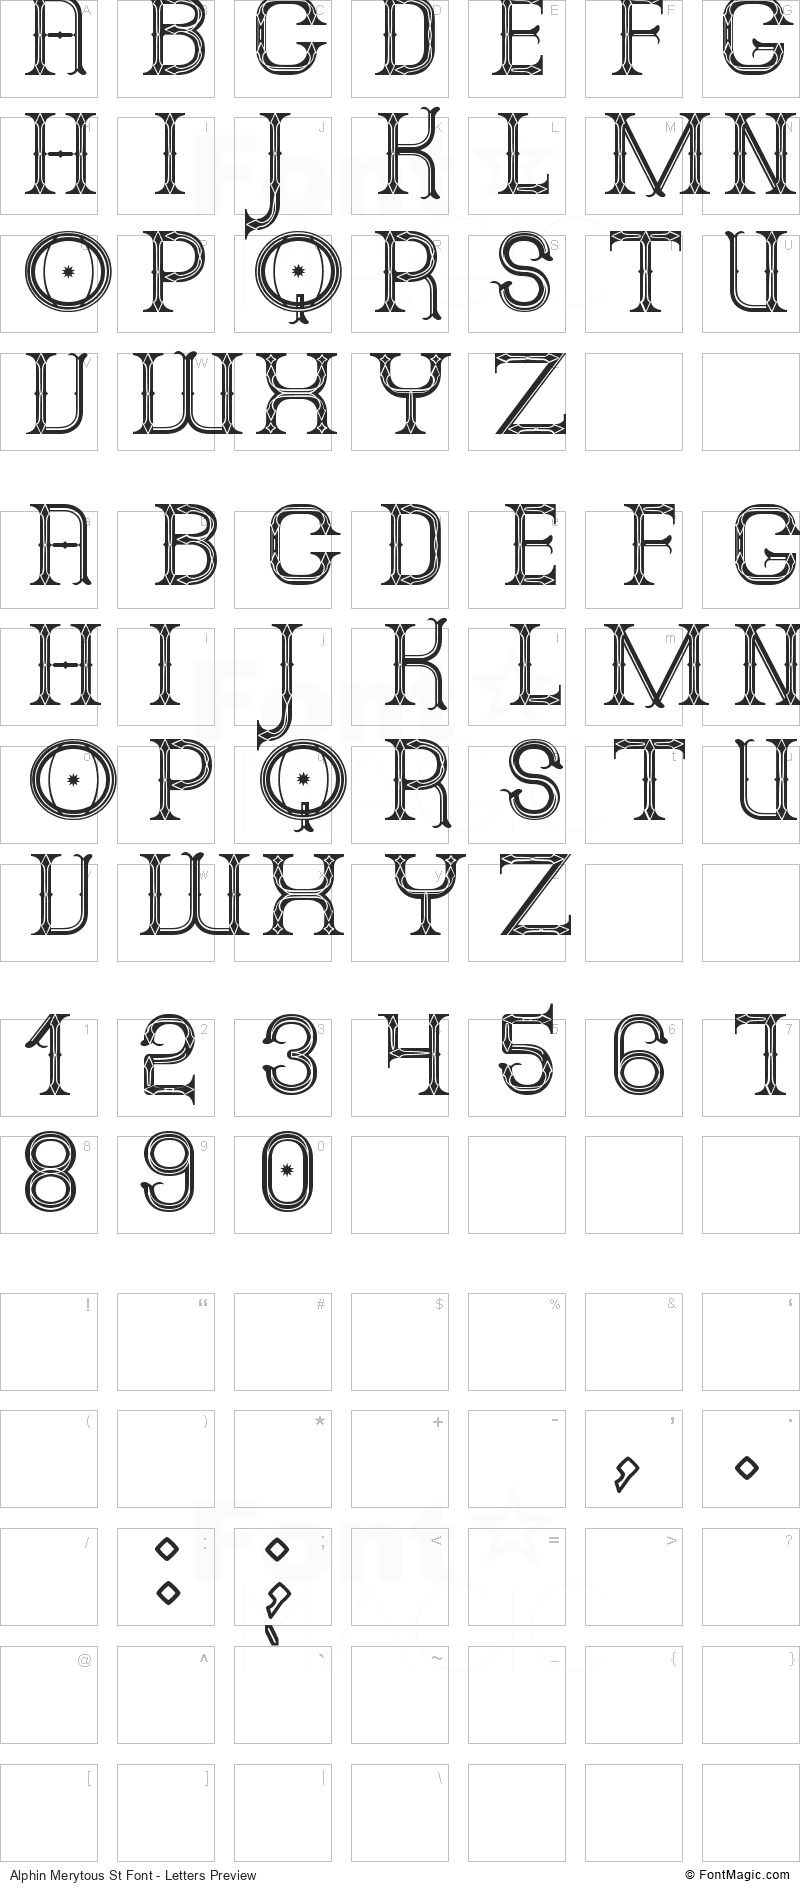 Alphin Merytous St Font - All Latters Preview Chart